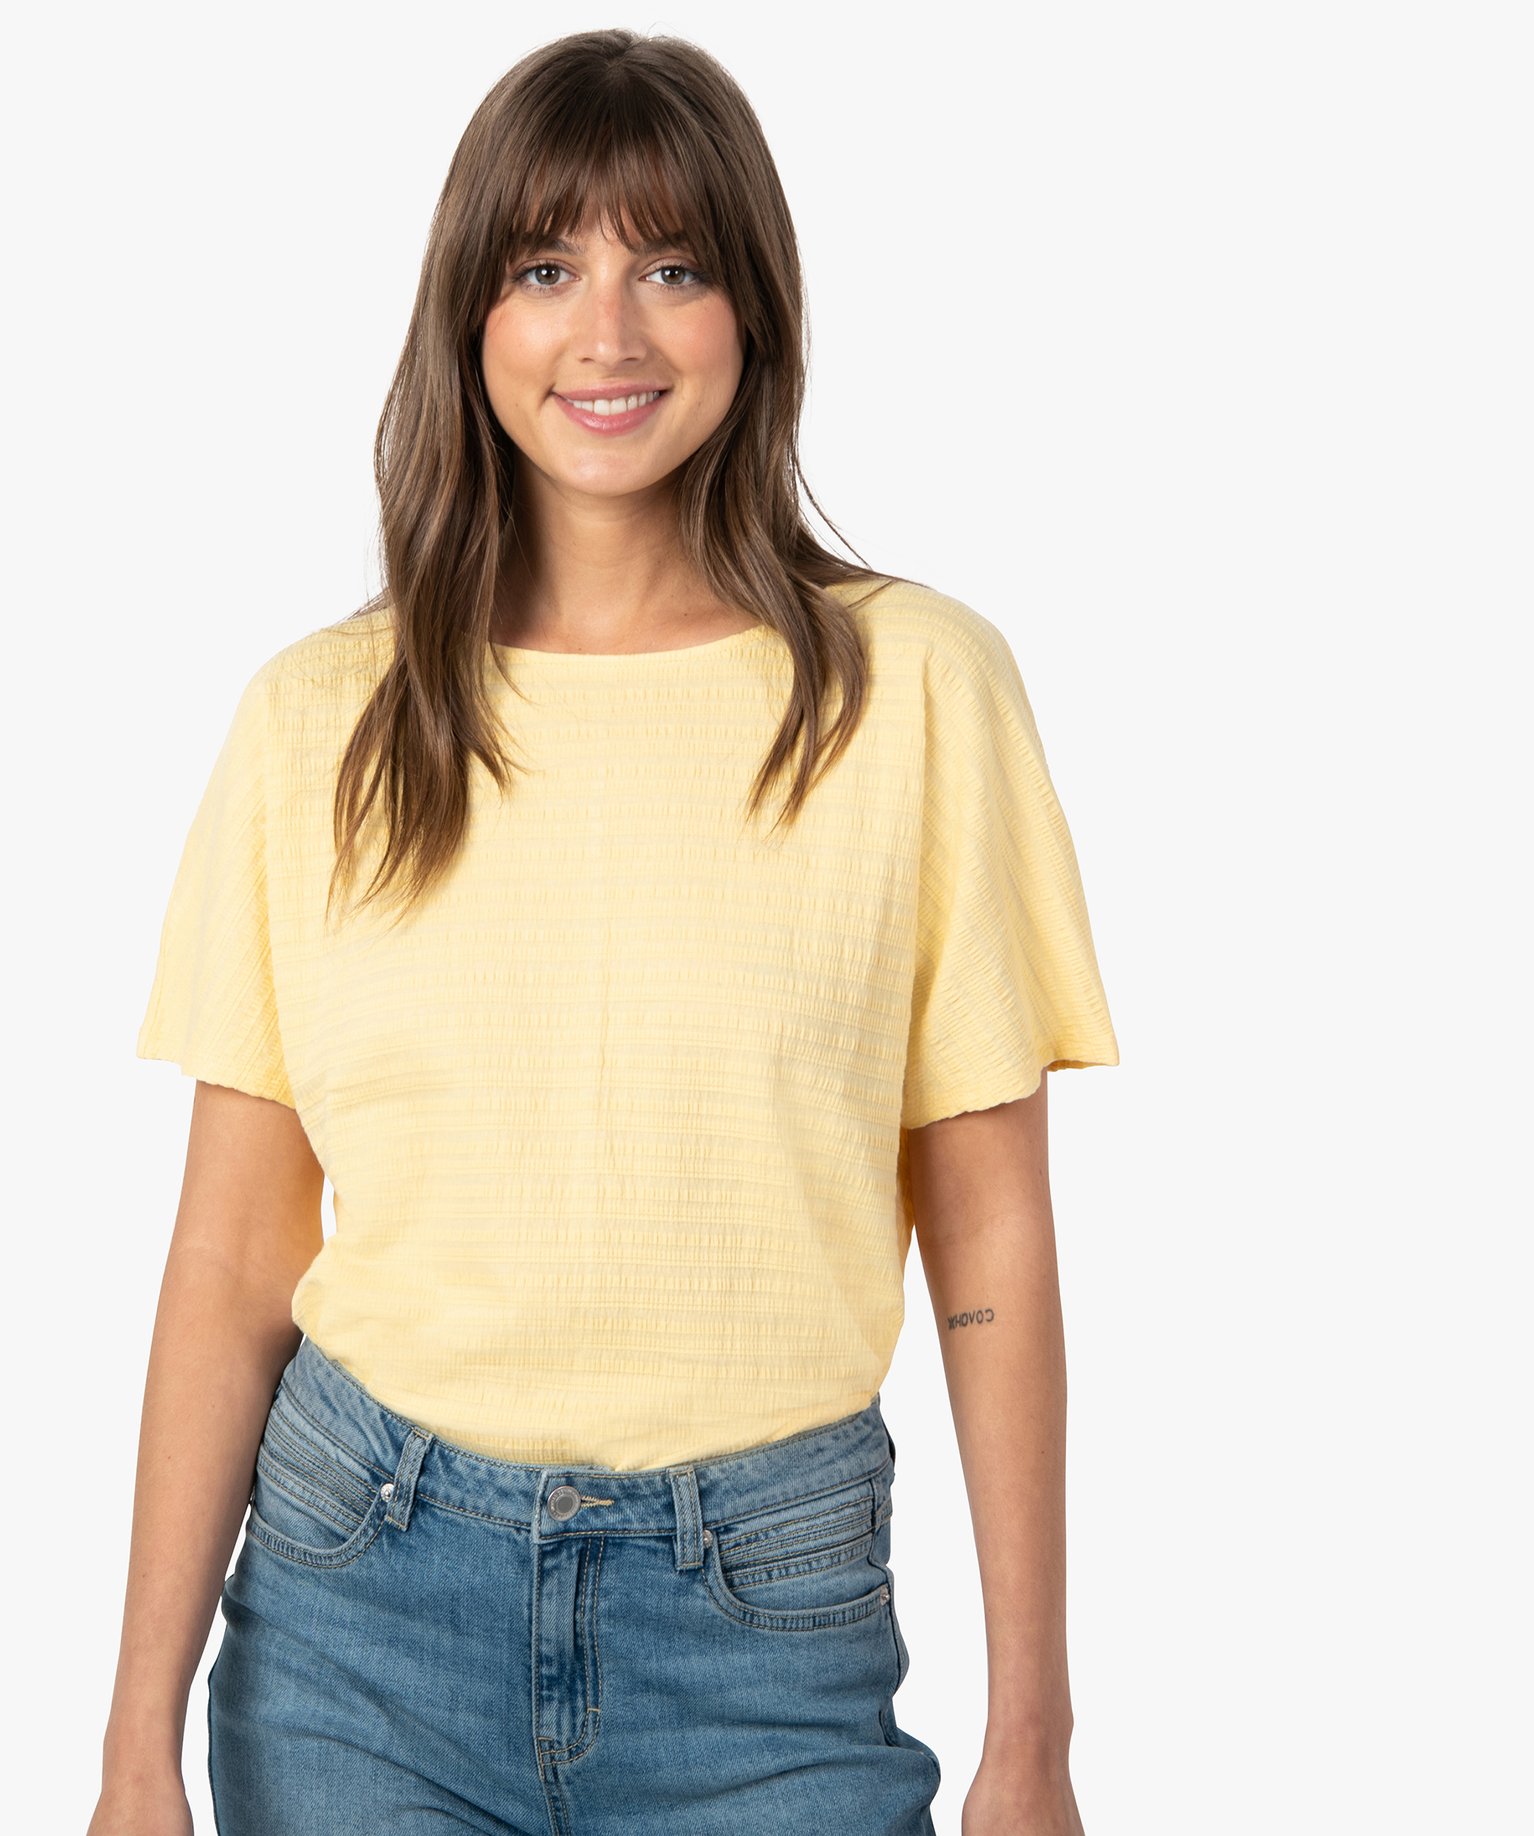 tee-shirt femme a manches courtes en maille texturee jaune t-shirts manches courtes